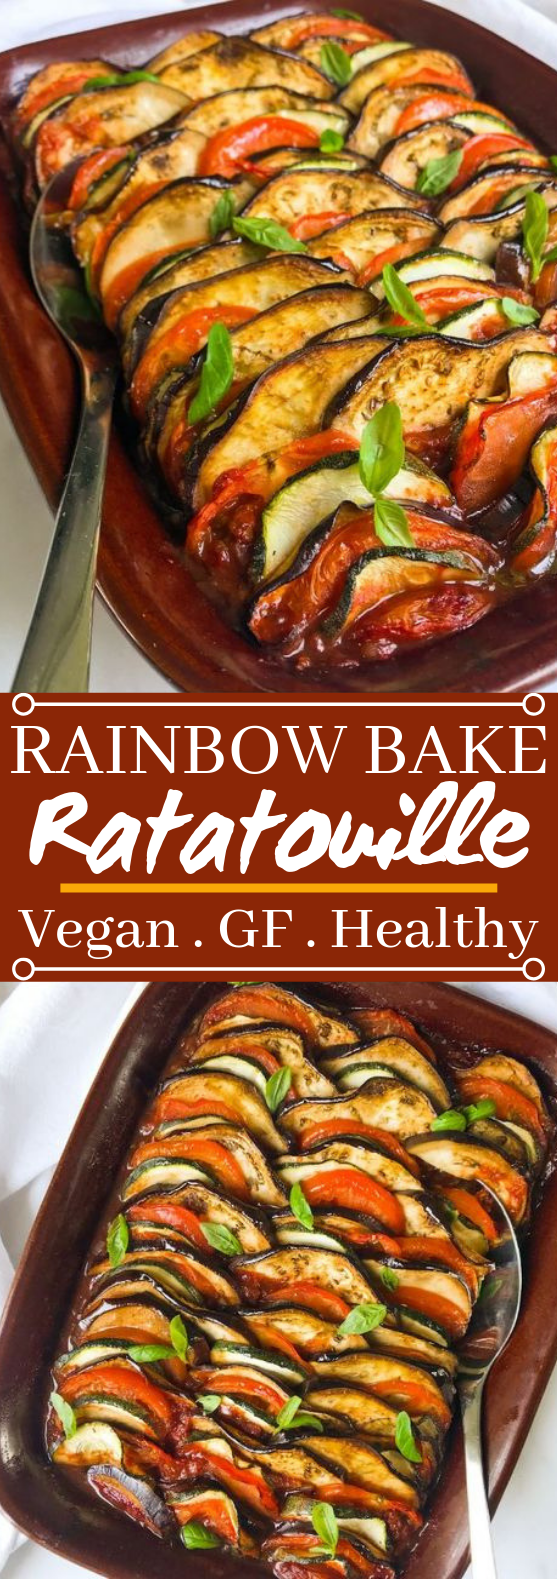 RAINBOW BAKED RATATOUILLE WITH BASIL & THYME #vegetarian #glutenfree